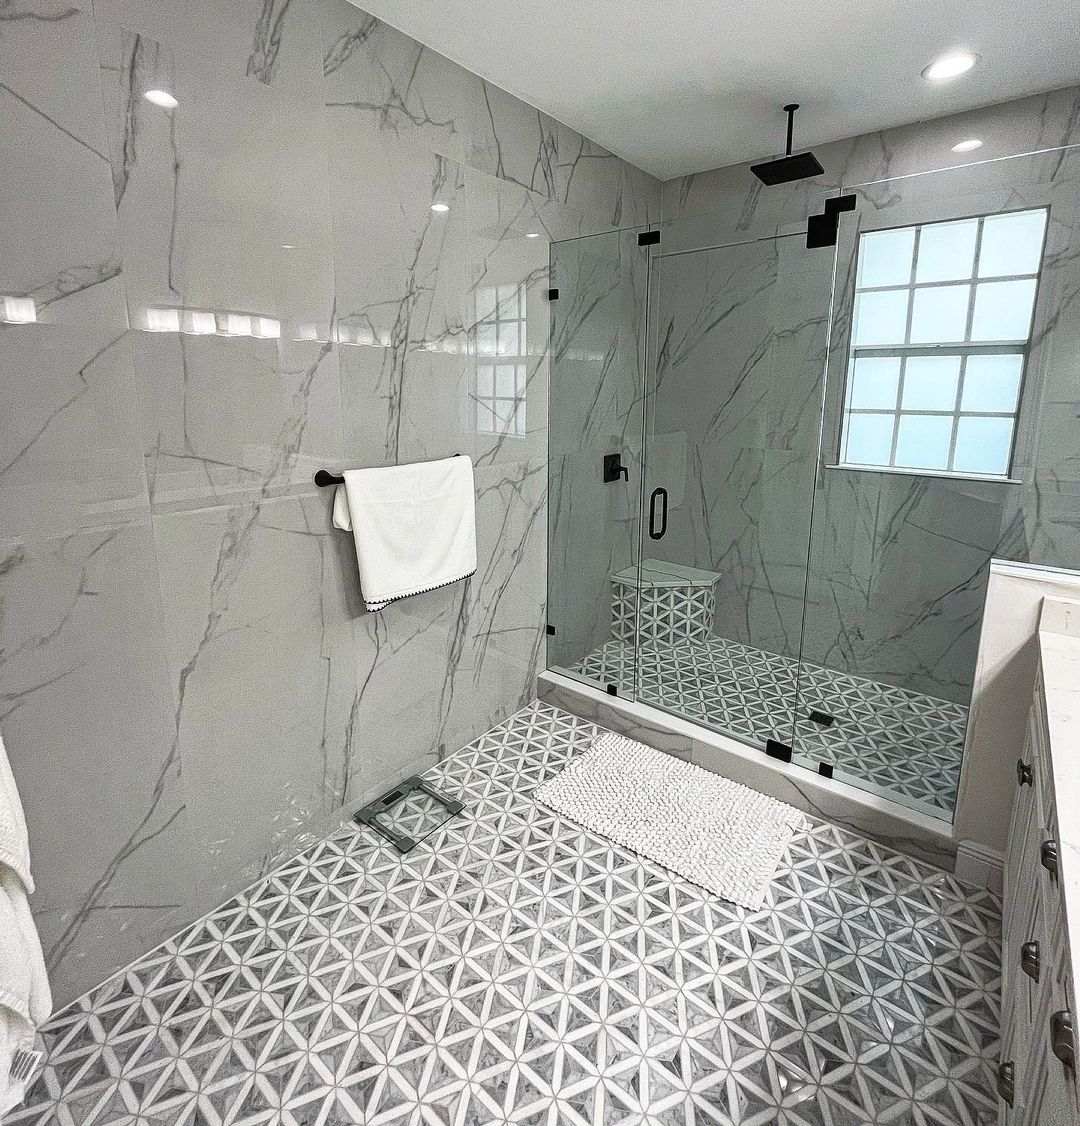 same floor and wall tiles in bathroom